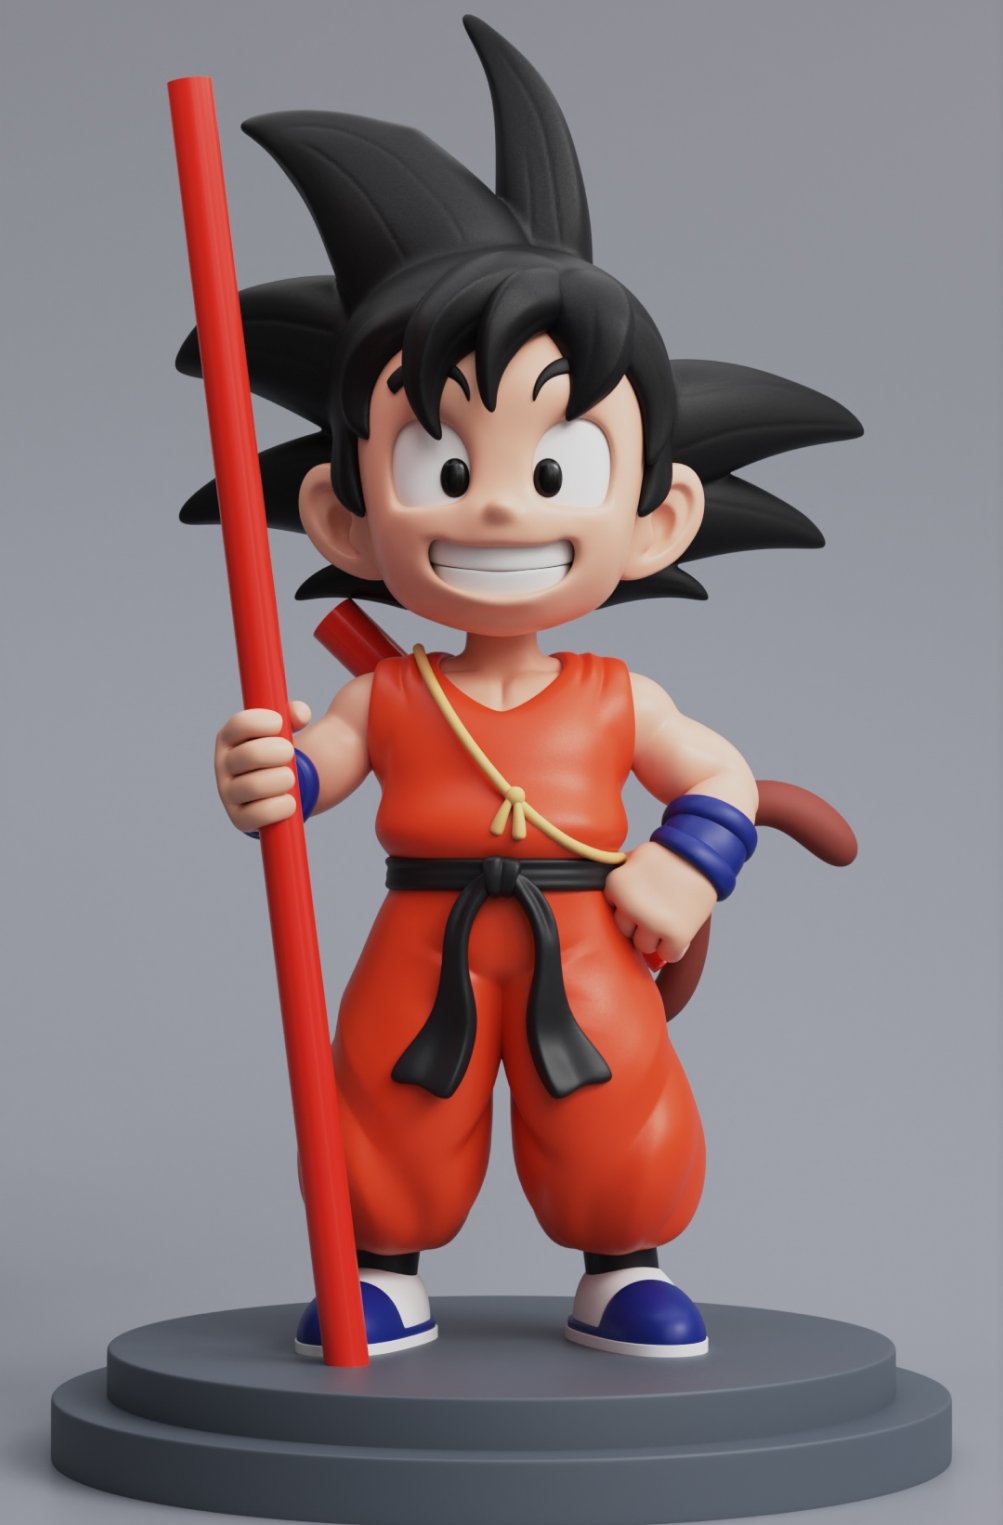 Goku - By KeelanJon